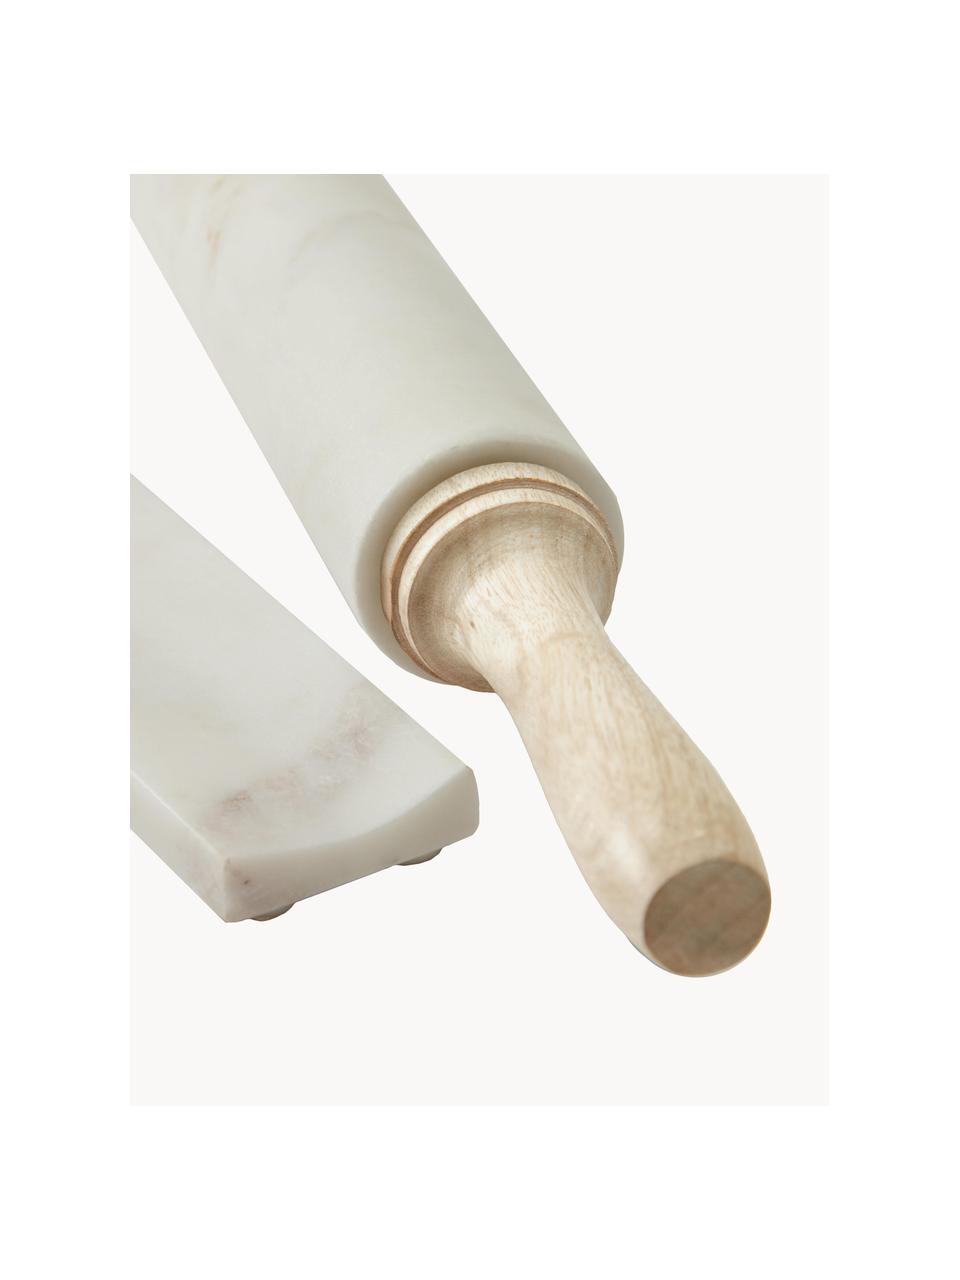 Marmor-Nudelholz mit Auflage Aimil, 2er-Set, Griffe: Holz, Weiß, marmoriert, Helles Holz, Ø 7 x L 41 cm